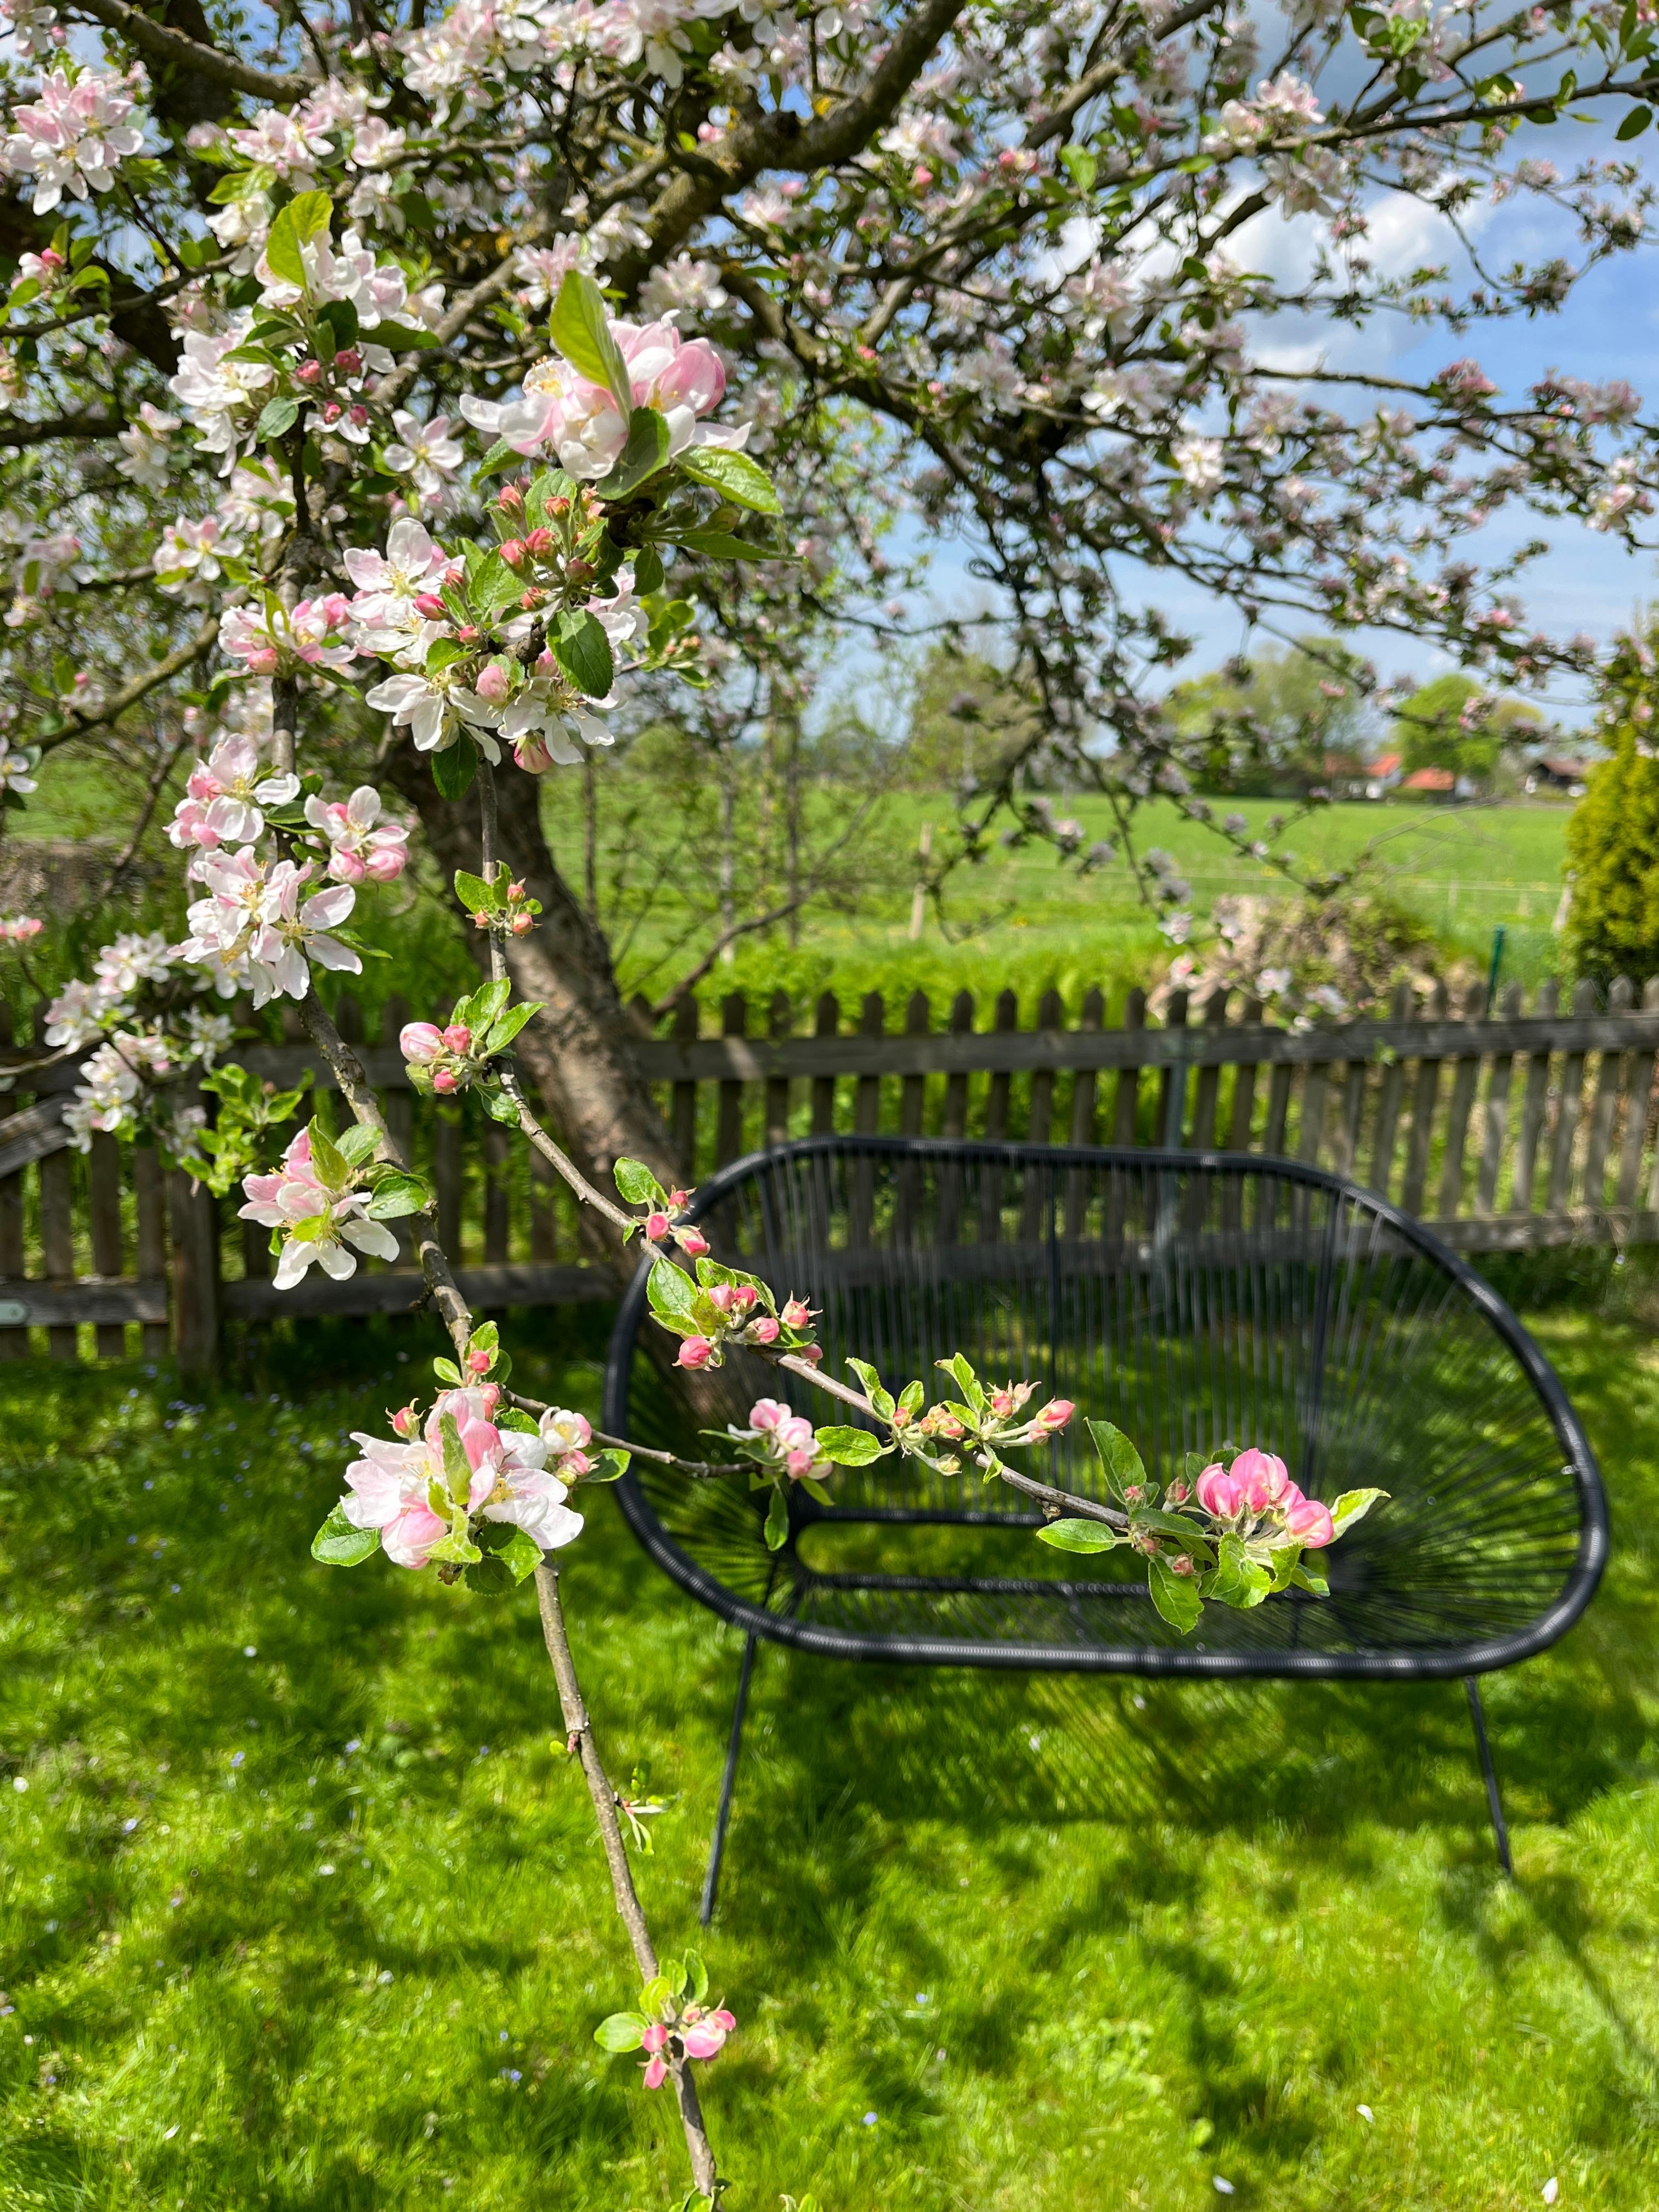 Apfelblüte 🍎
#apfelbaum#garten#apfelblüte#frühling#outdoorliving#gartengestaltung#obstbaum#apfel